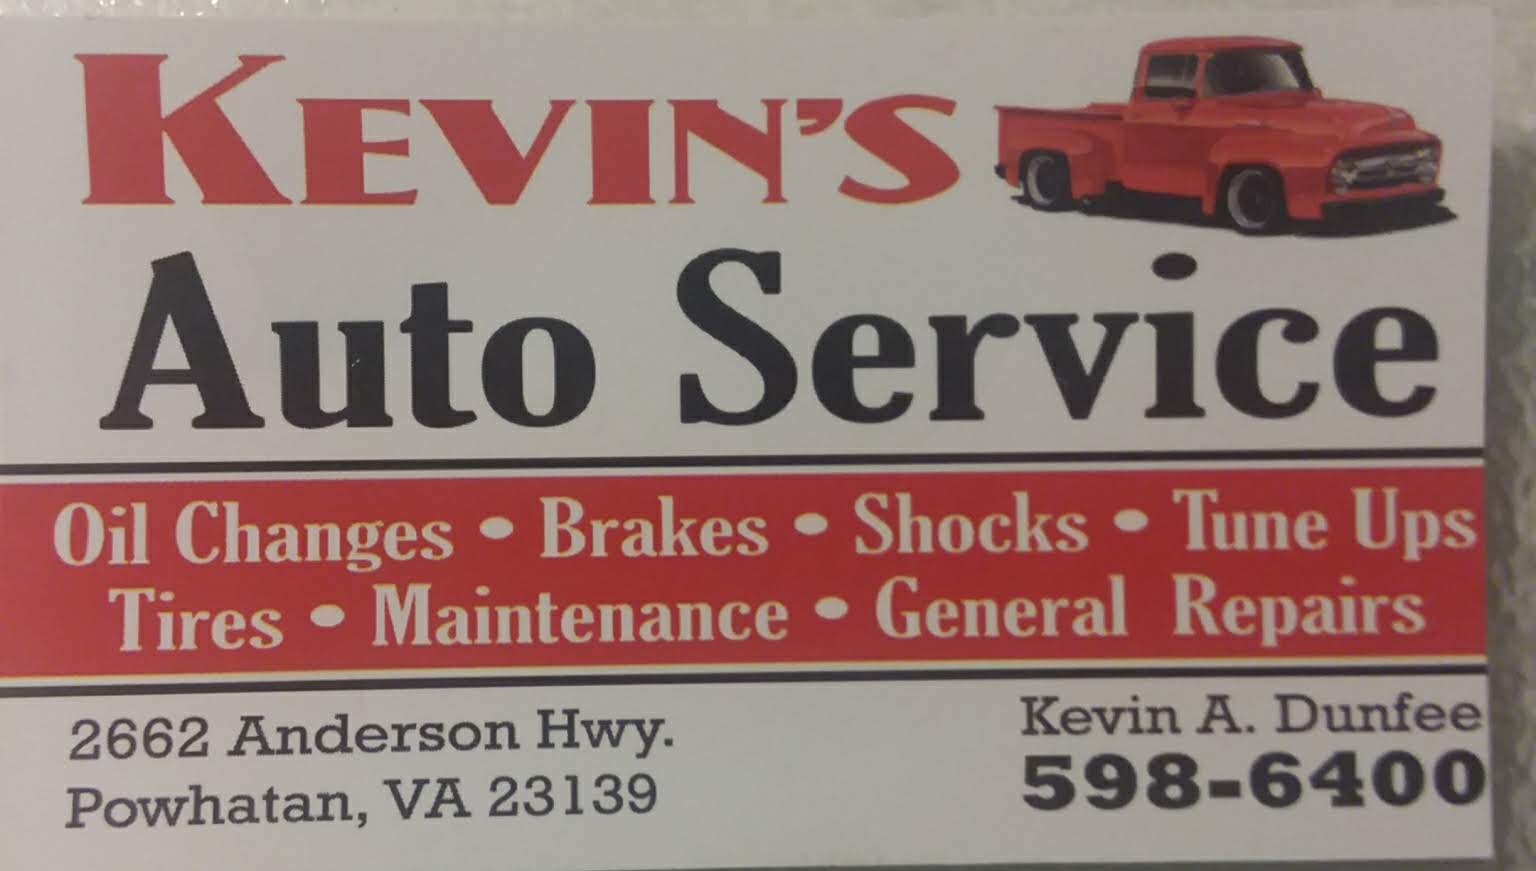 Kevin's Auto Service